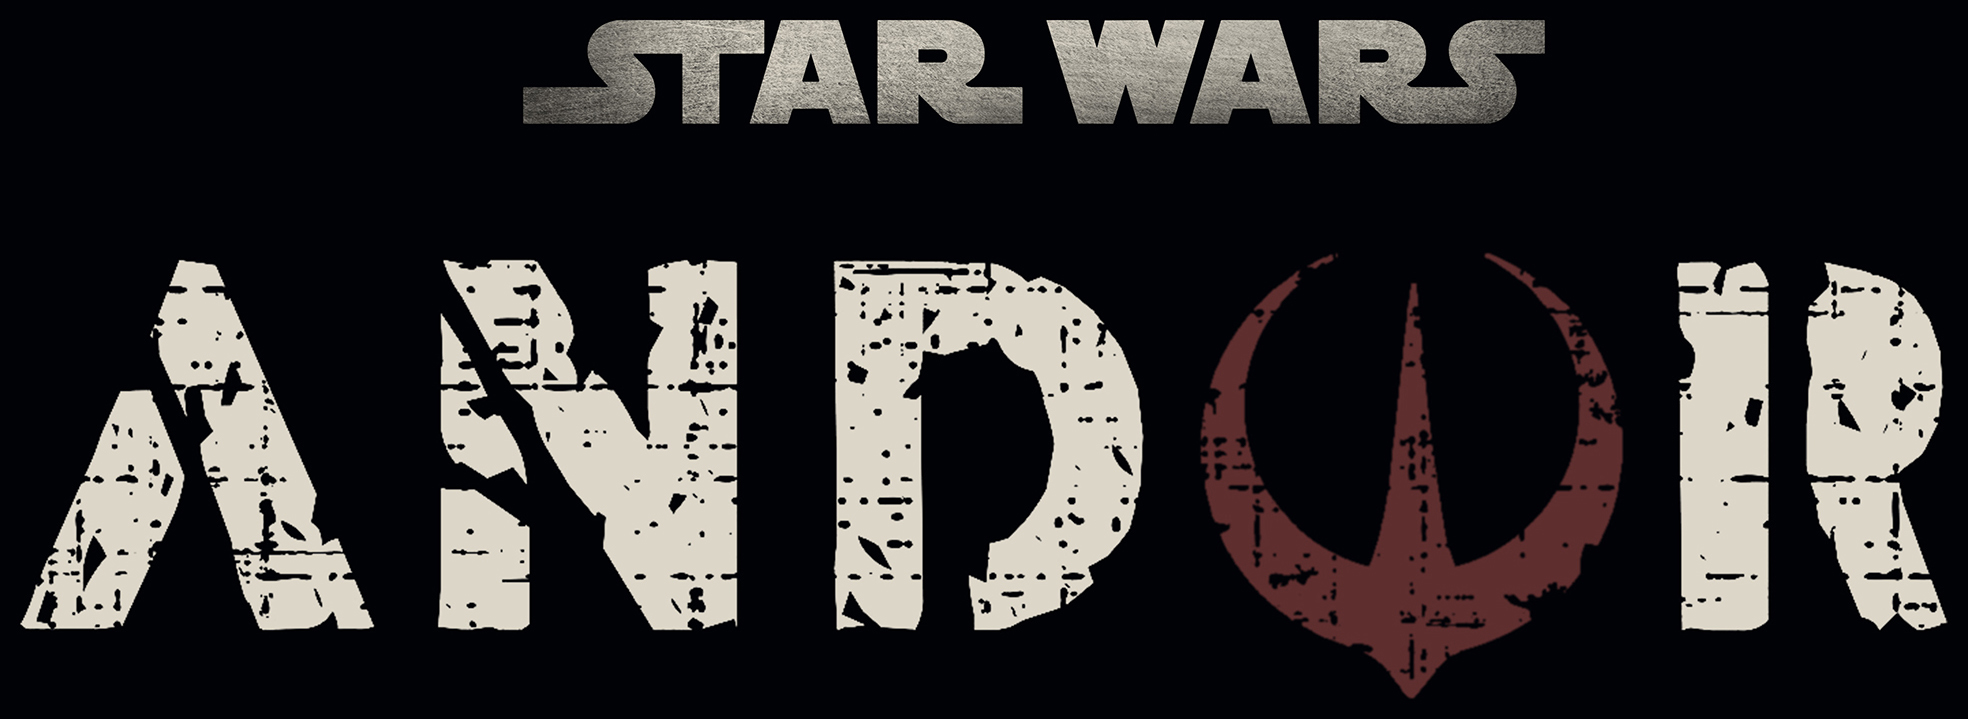 Star Wars: Andor - Behind the scenes, Industry Trends